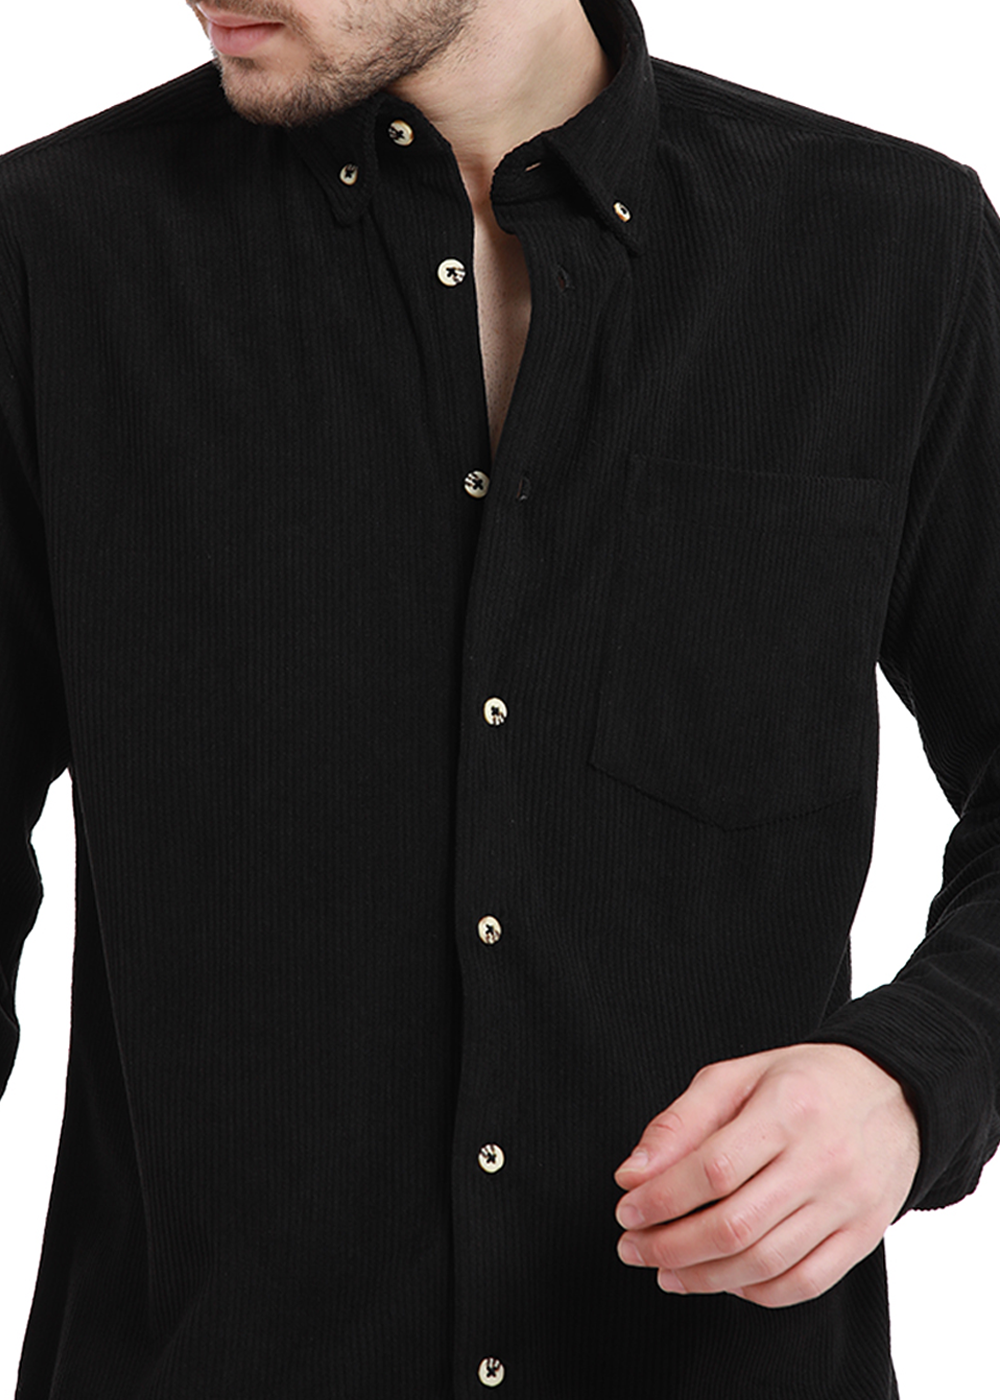 Licorice Black Corduroy Shirt